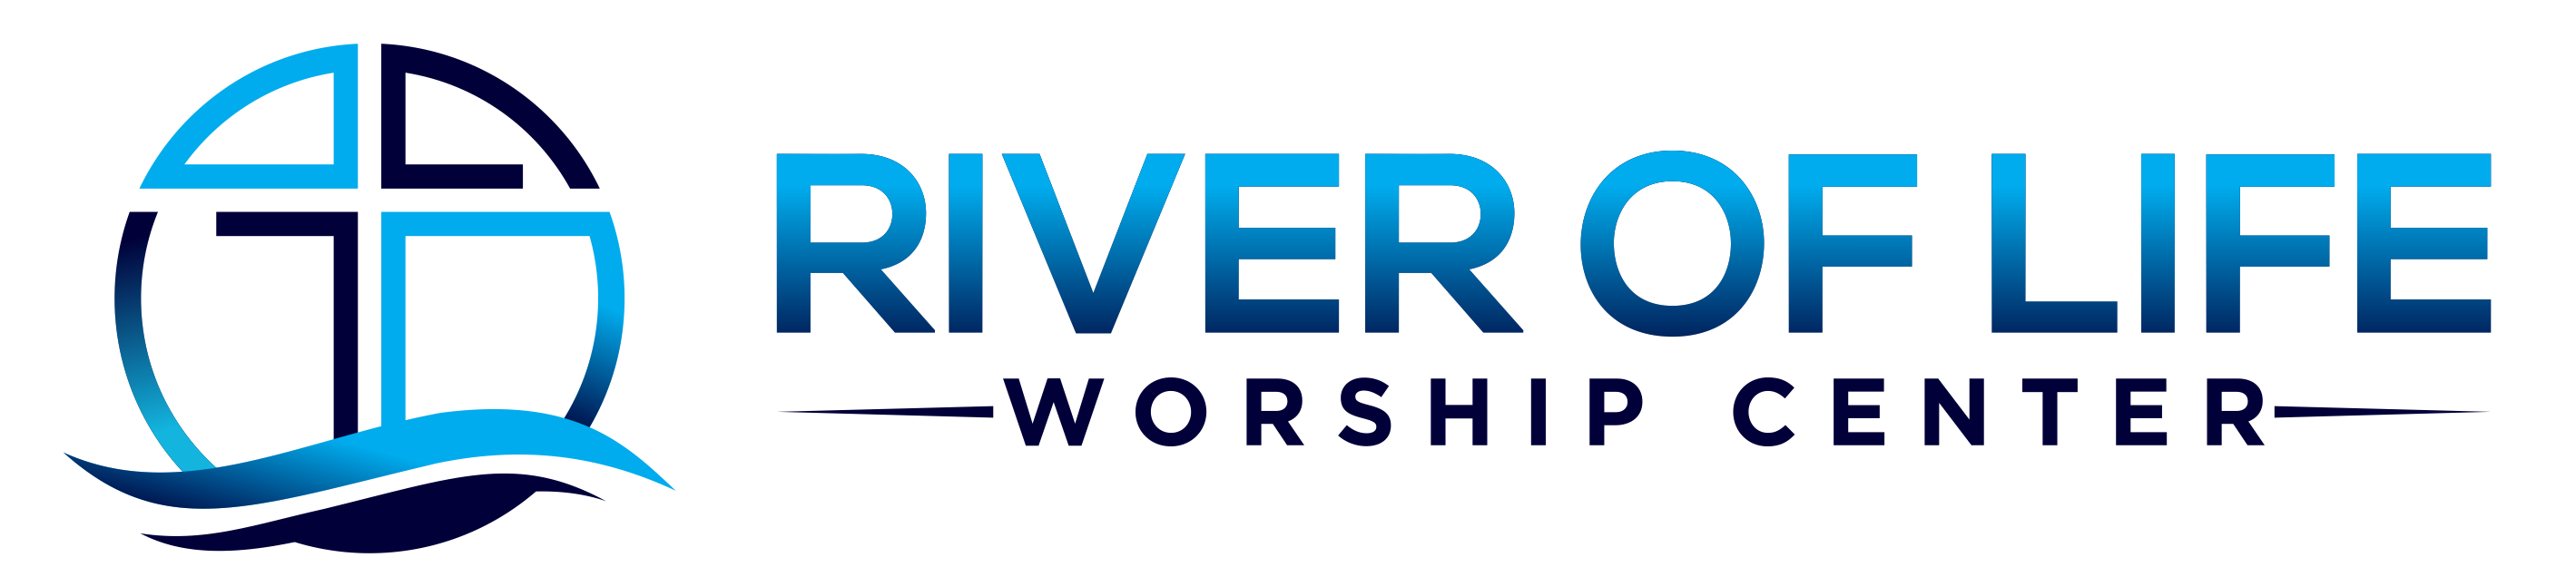 River of Life Worship Center